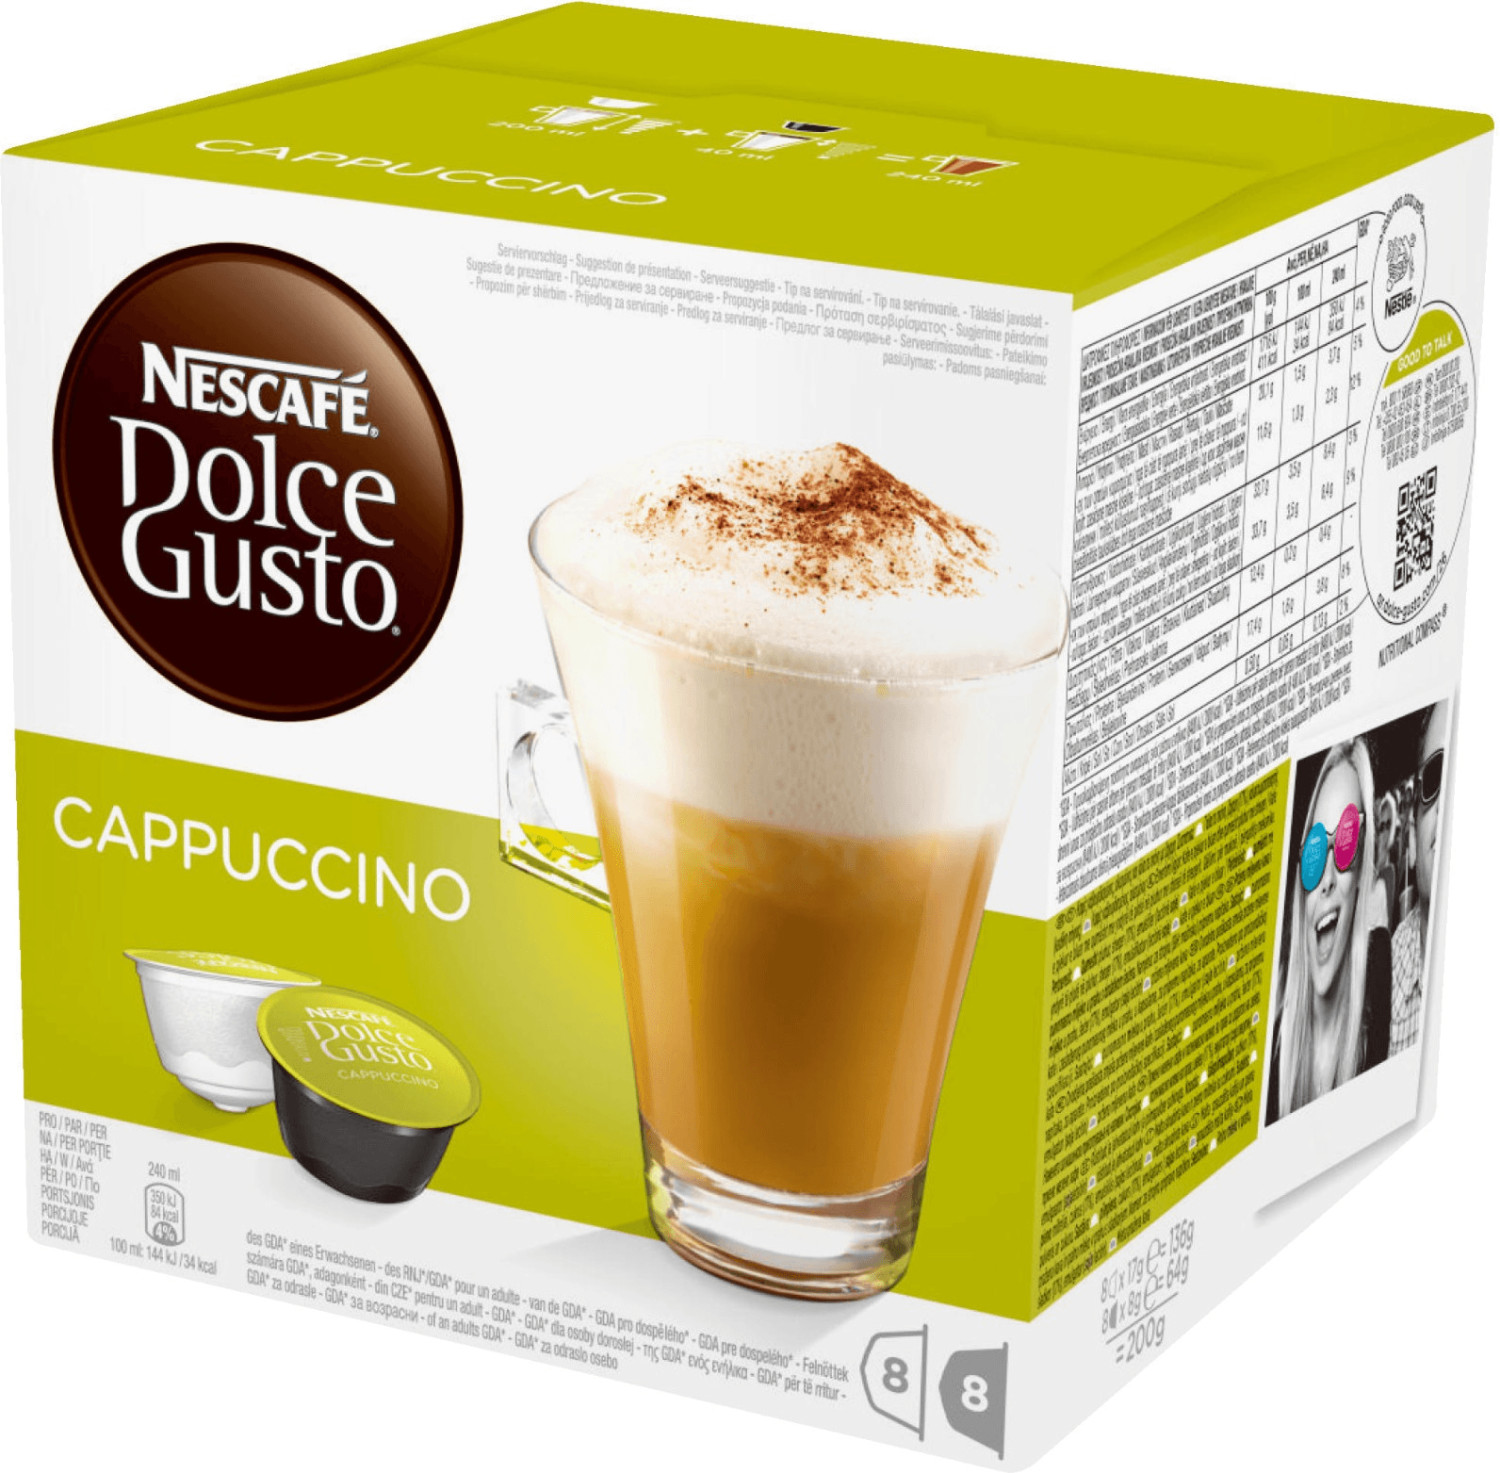 https://cdn.idealo.com/folder/Product/634/0/634087/s4_produktbild_max/nescafe-dolce-gusto-cappuccino-x16.jpg